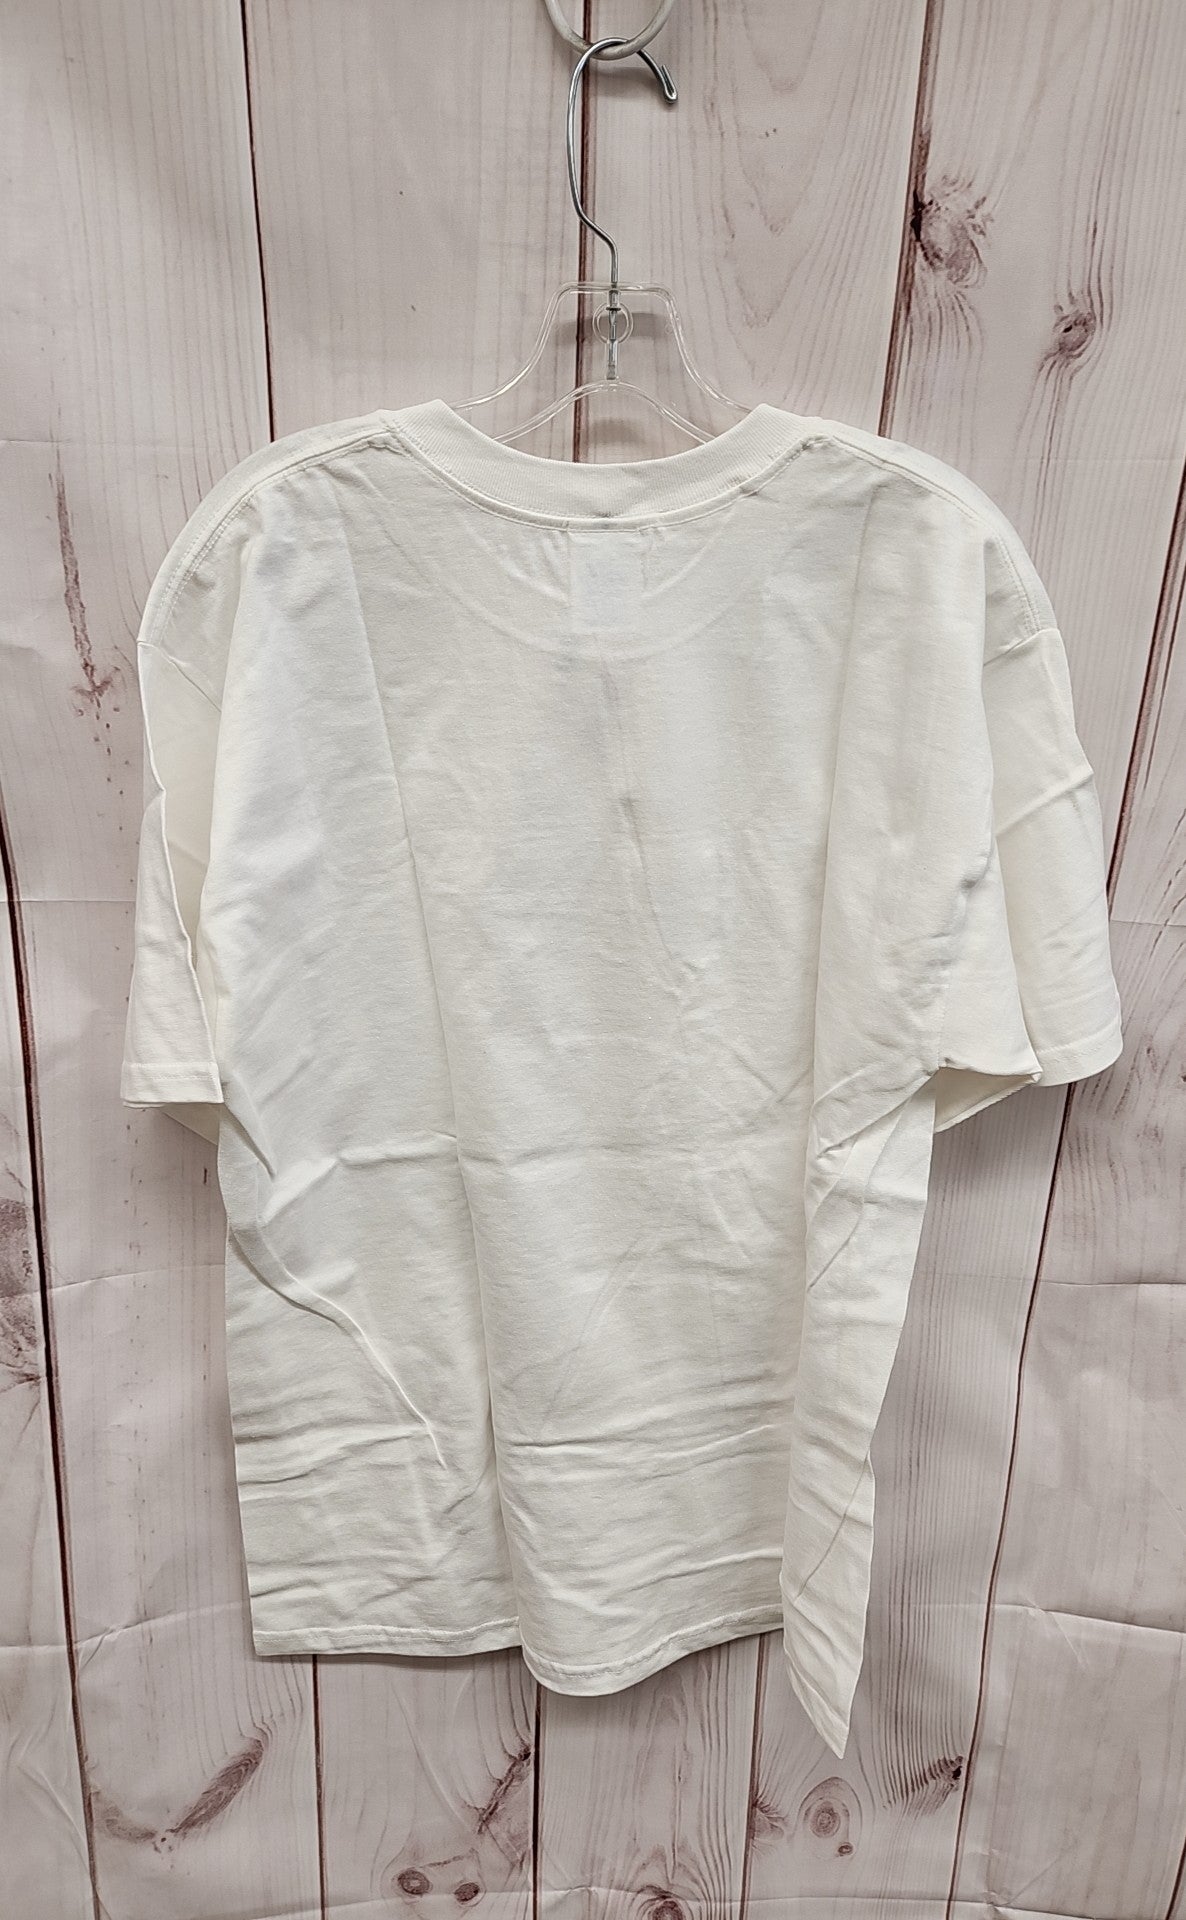 Gildan Men's Size L White Shirt